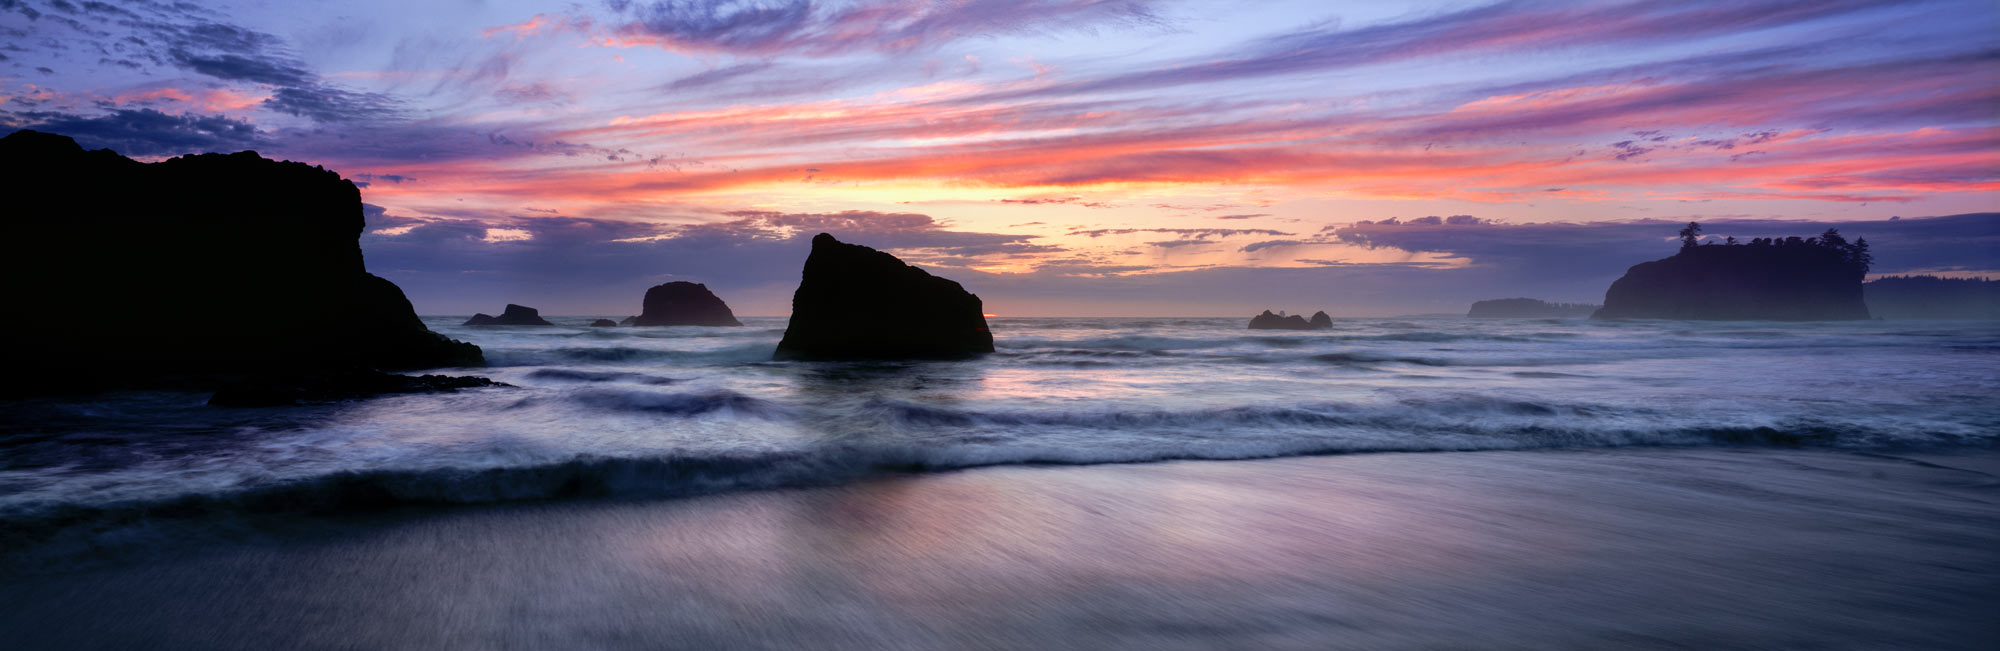 Beautiful sunset on ruby beach between the huge rocks